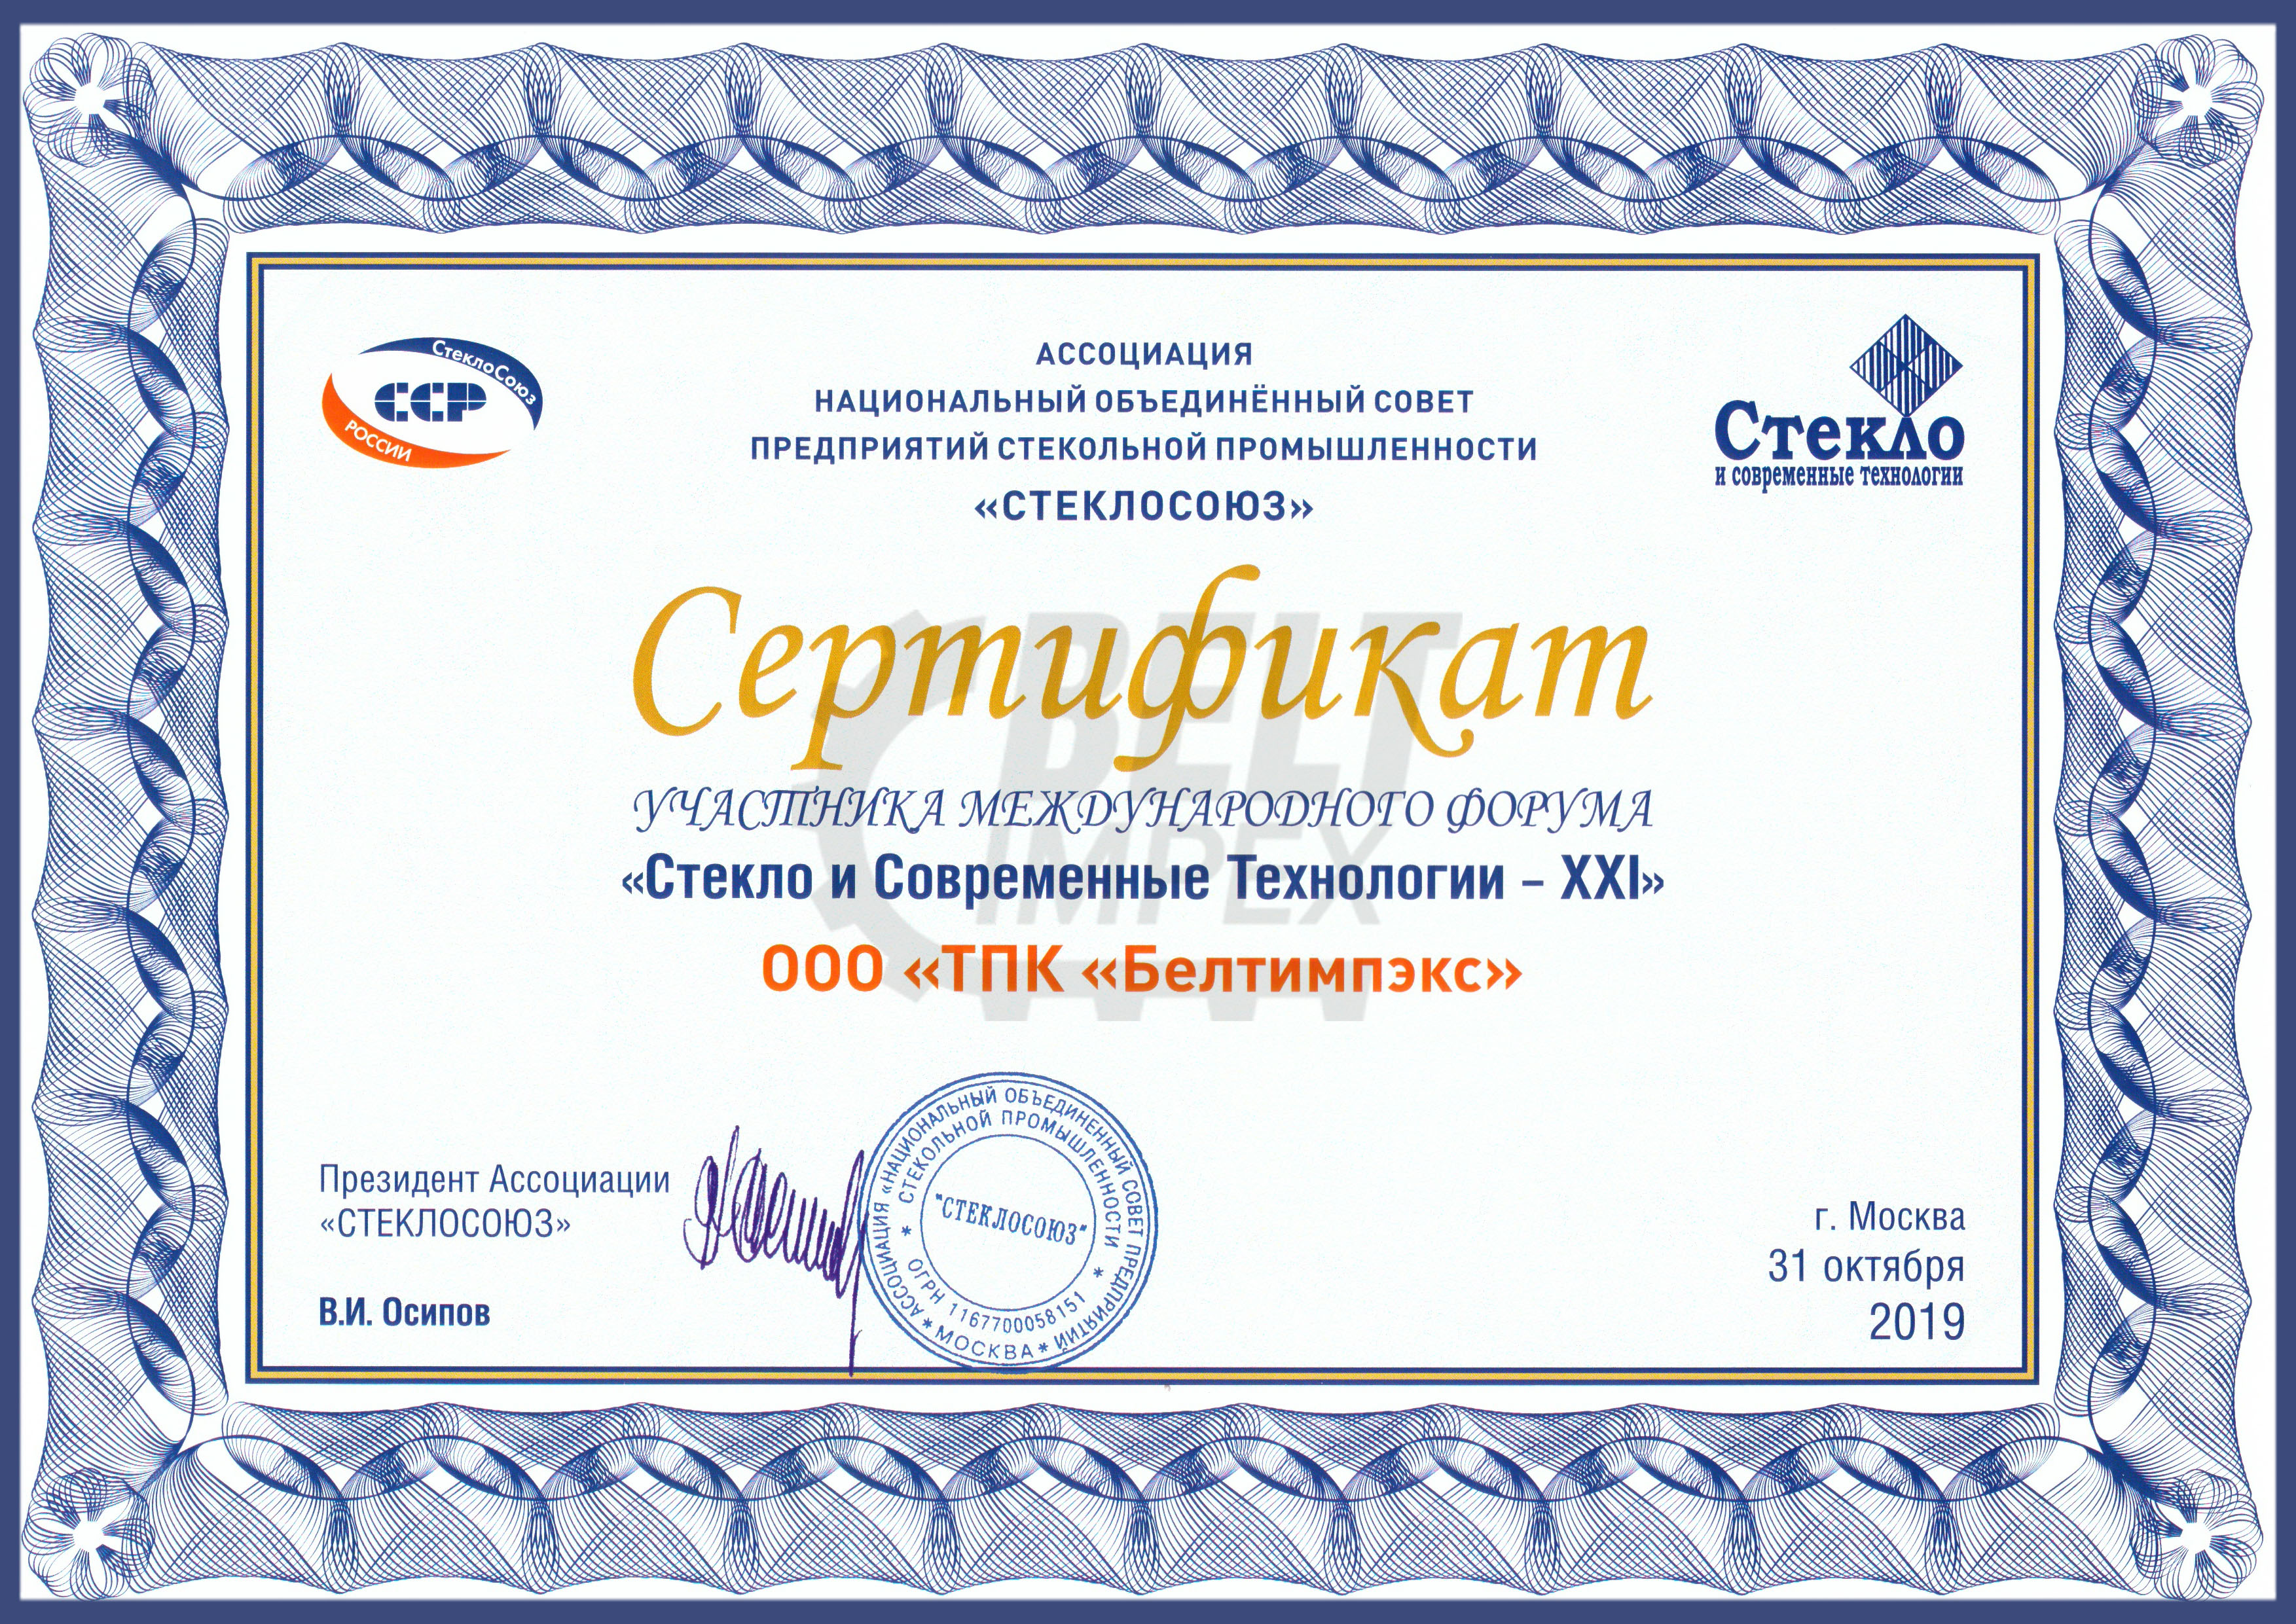 Сертификат участника международного форума 